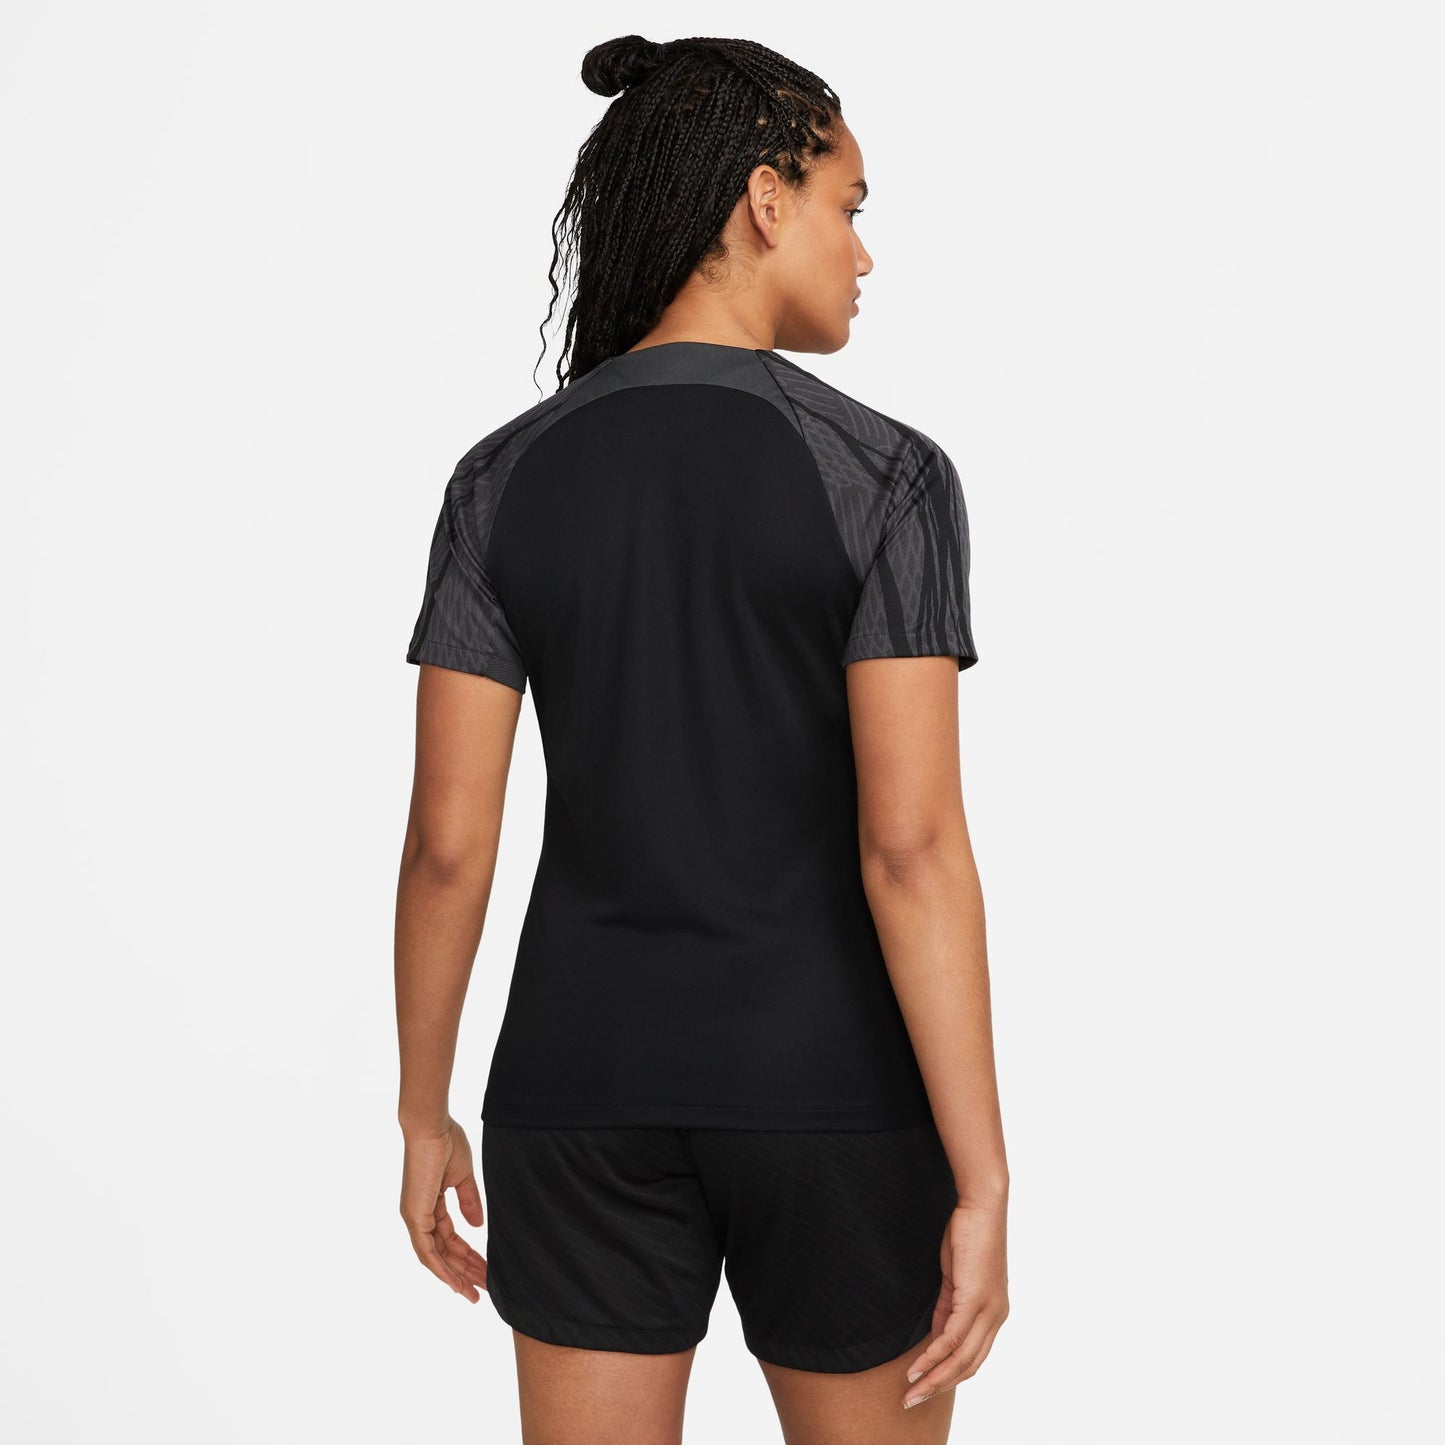 Nike Dri-FIT Strike - Women's Short-Sleeve Top - Black